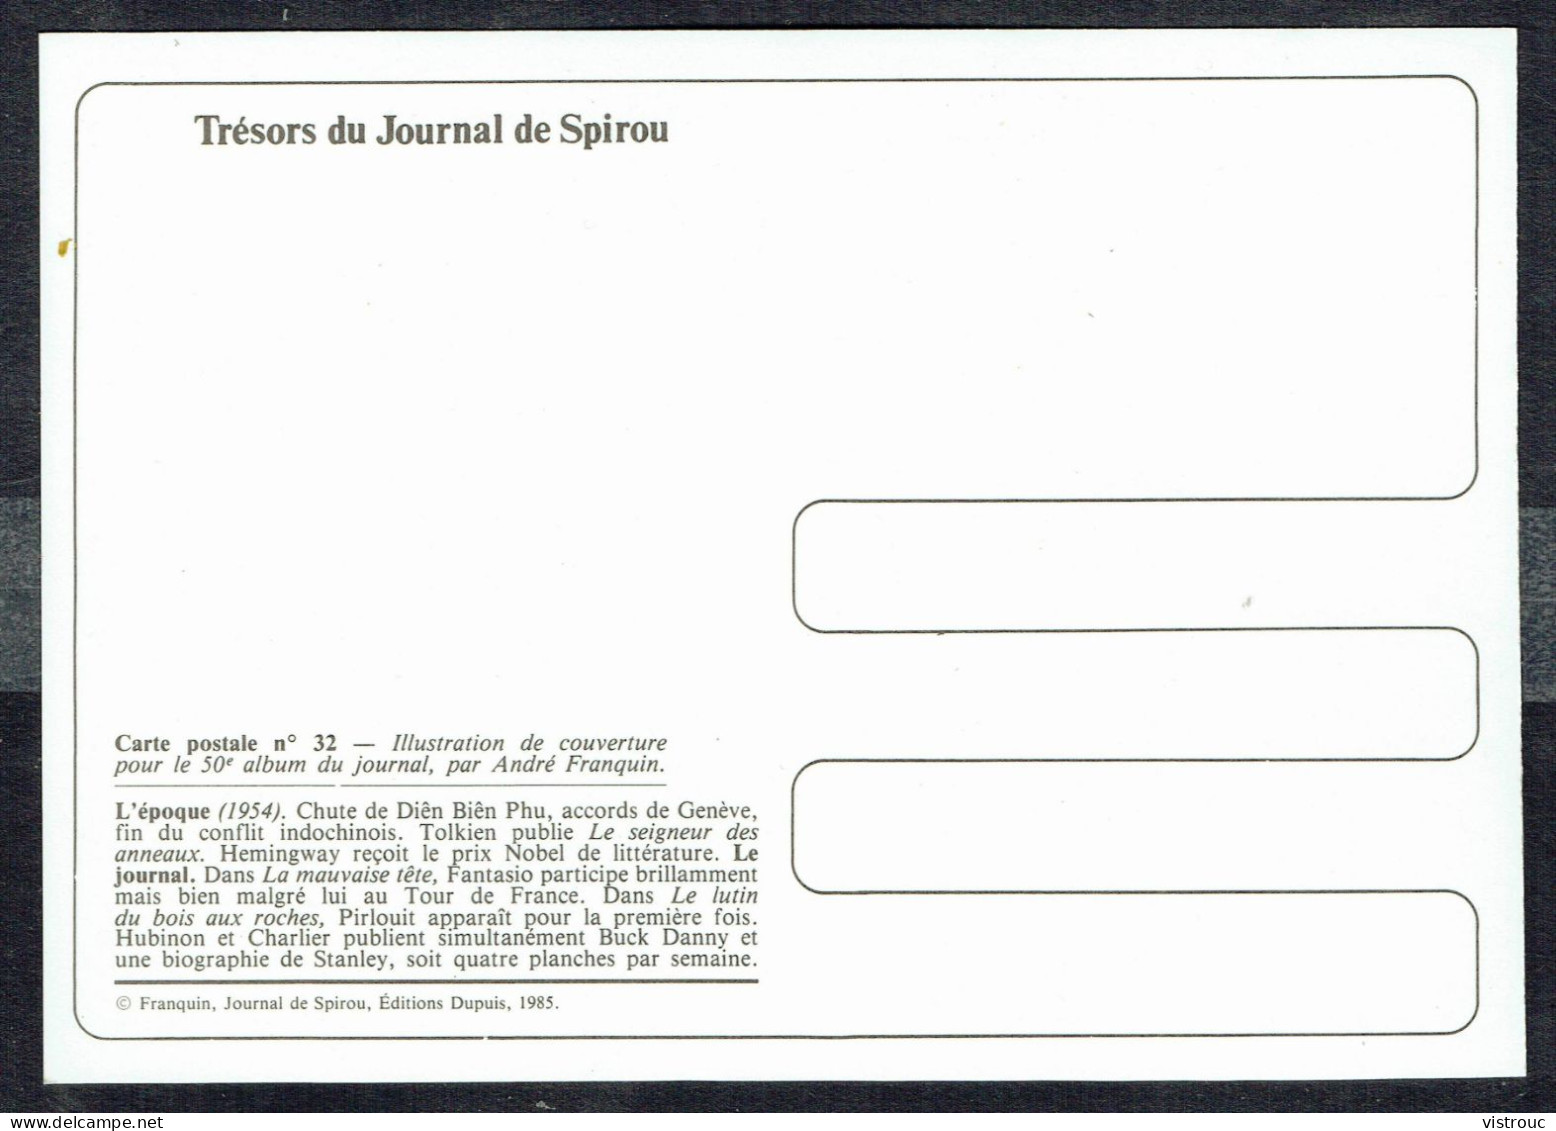 SPIROU - CP N° 32 : Illustration Couverture Album N° 50 De FRANQUIN - Non Circulé - Not Circulated - Ed. DUPUIS - 1985. - Comics